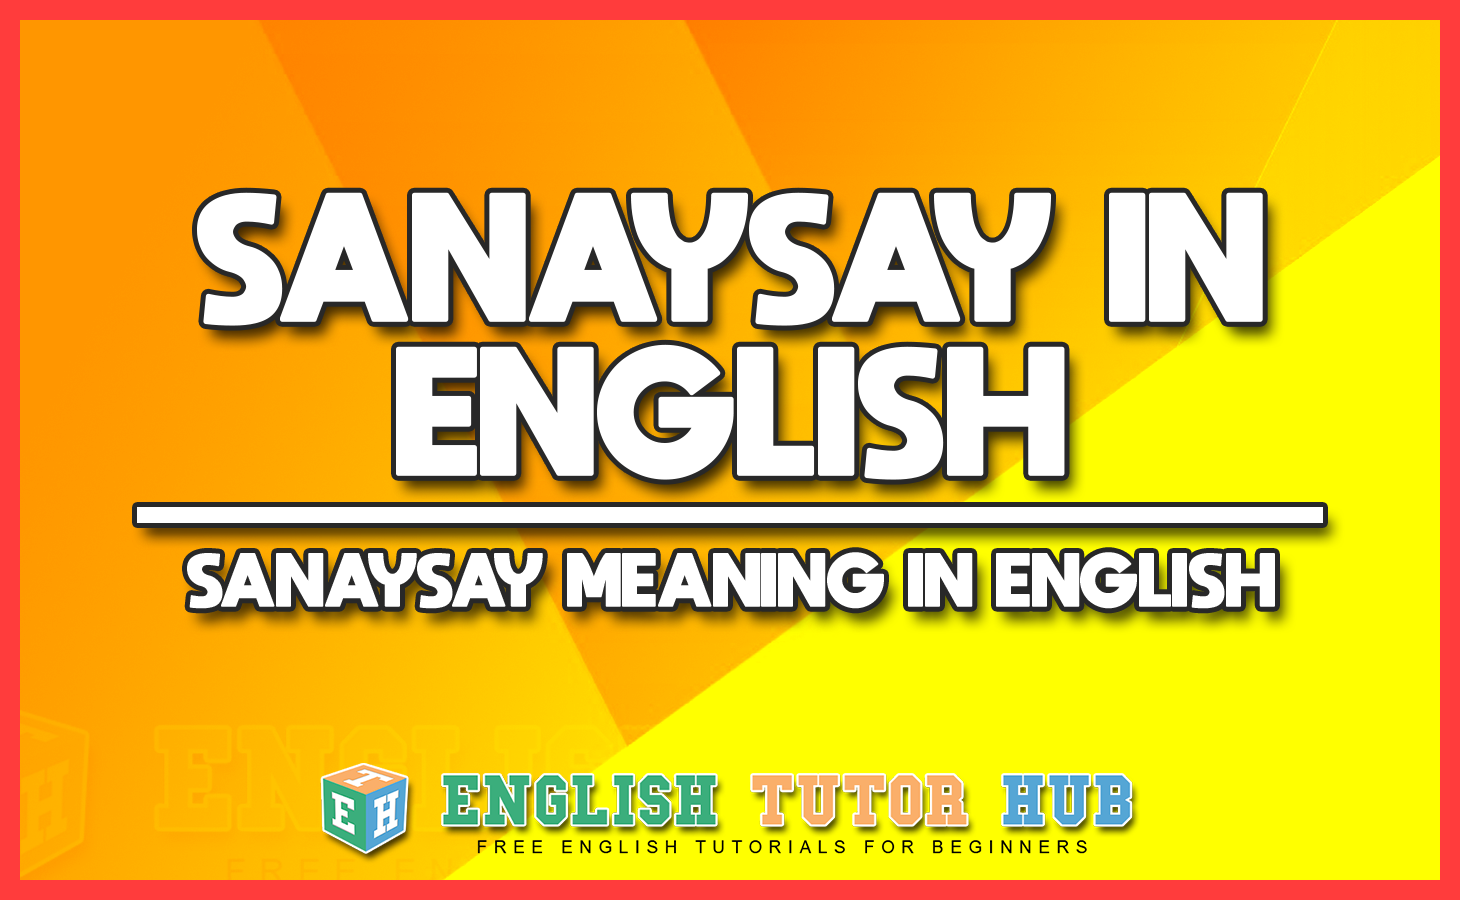 SANAYSAY IN ENGLISH - SANAYSAY MEANING IN ENGLISH